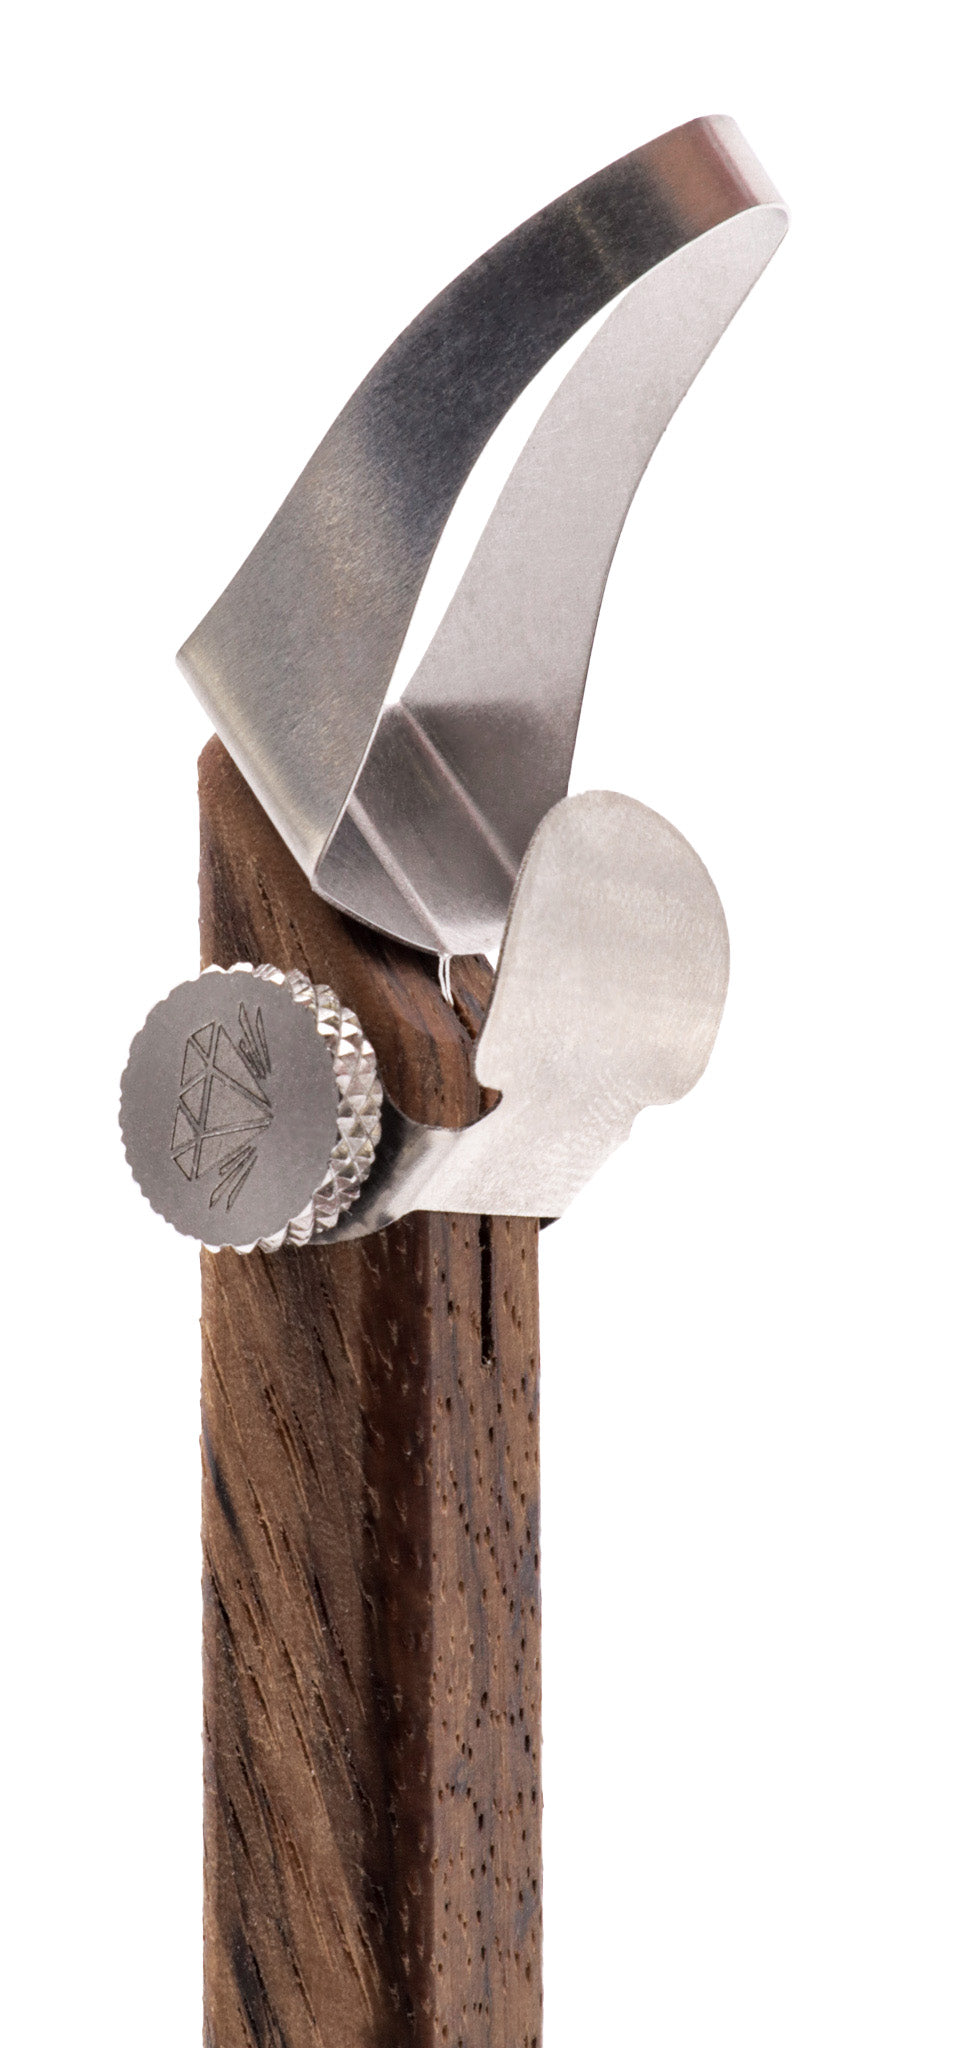 DiamondCore Tools - Tall Triangle Wall XL Handheld Clay Extruder (R212)